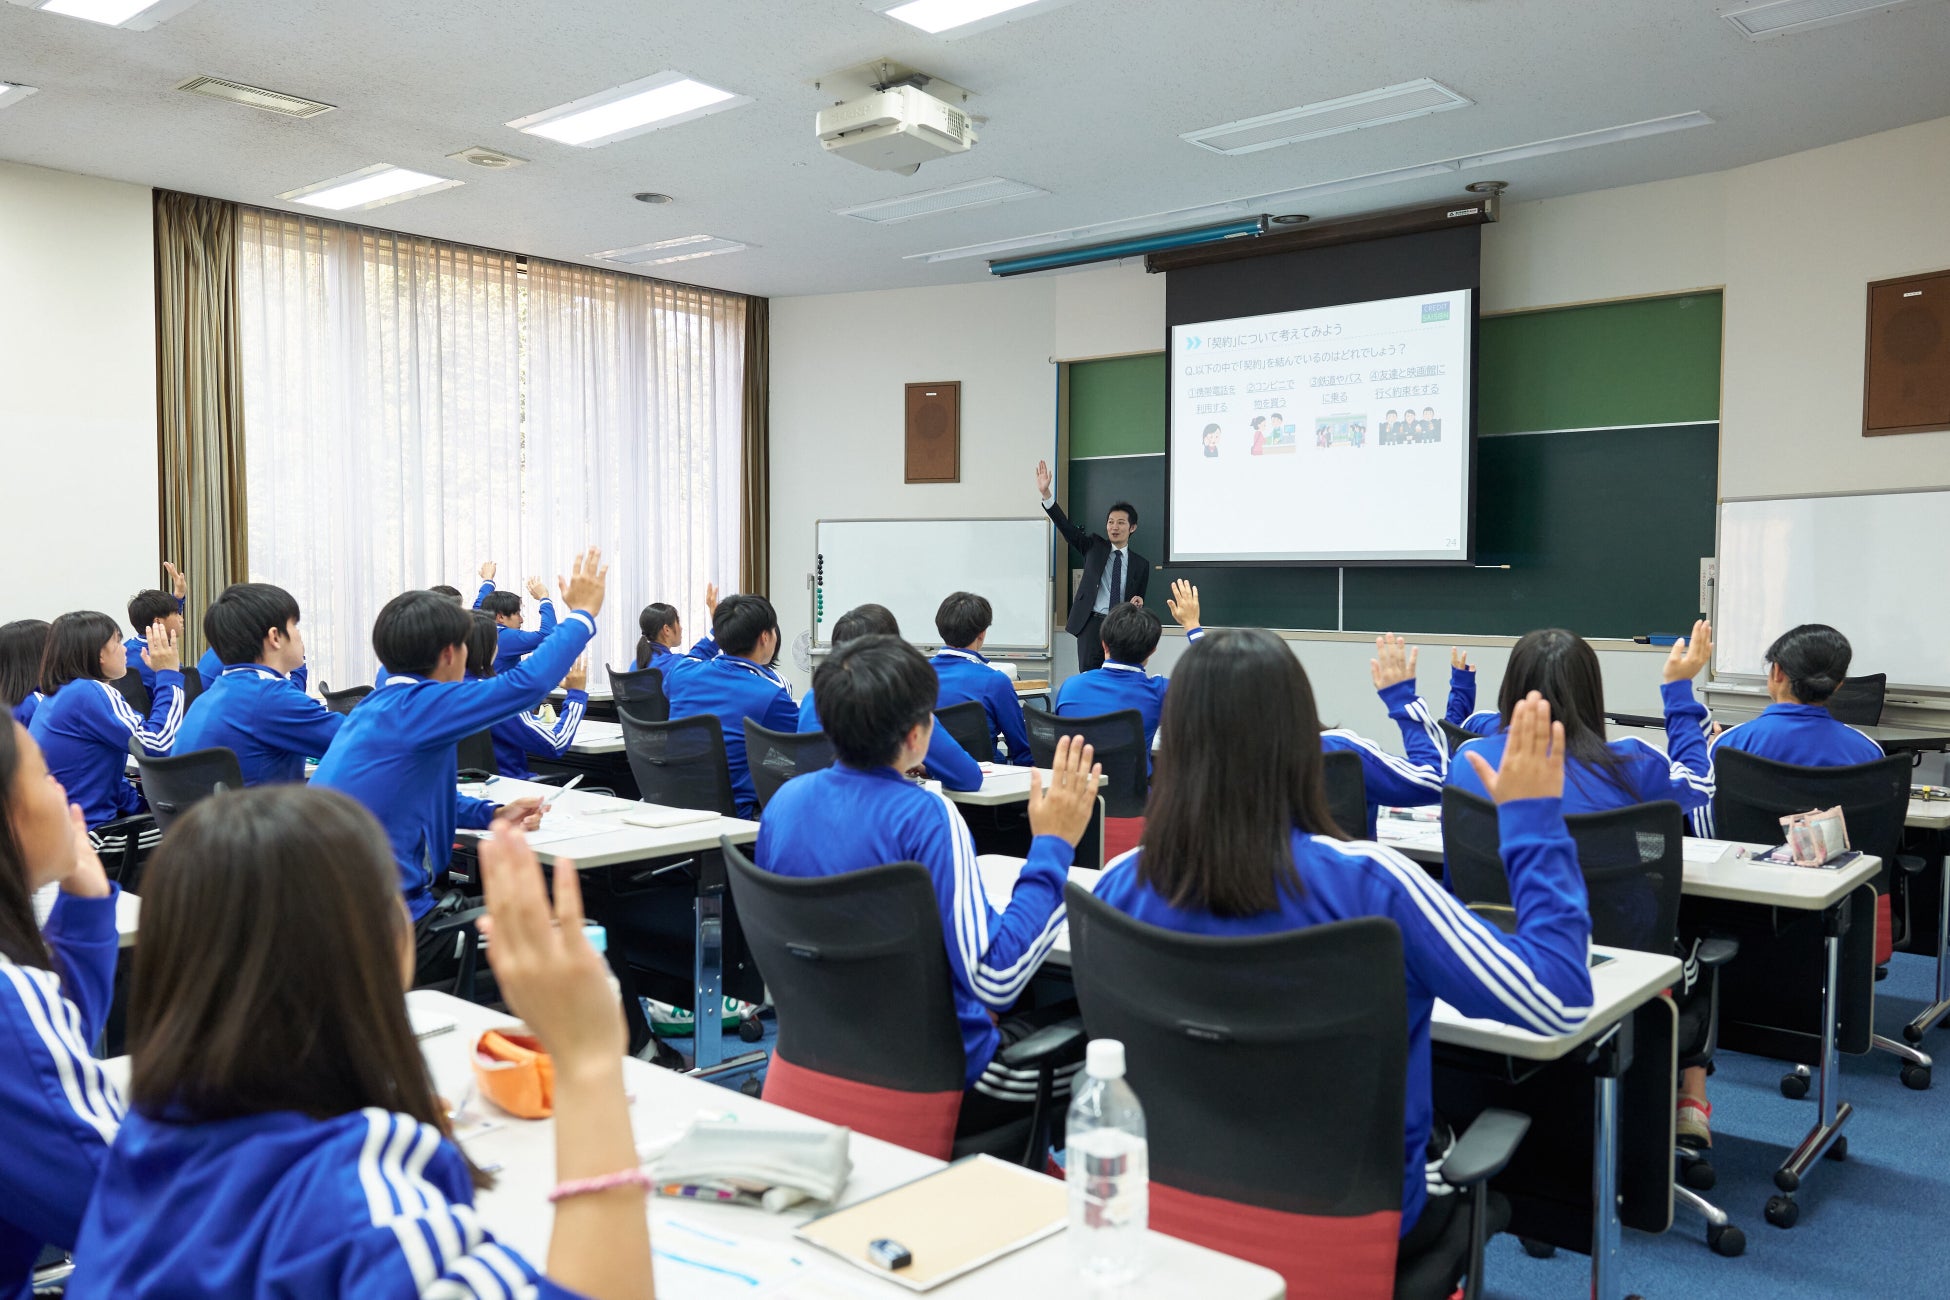 JFAとクレディセゾンが価値共創活動を展開　JFAアカデミー福島の高校生を対象にした金融教育プログラム「出張授業～SAISON TEACHER～」を実施